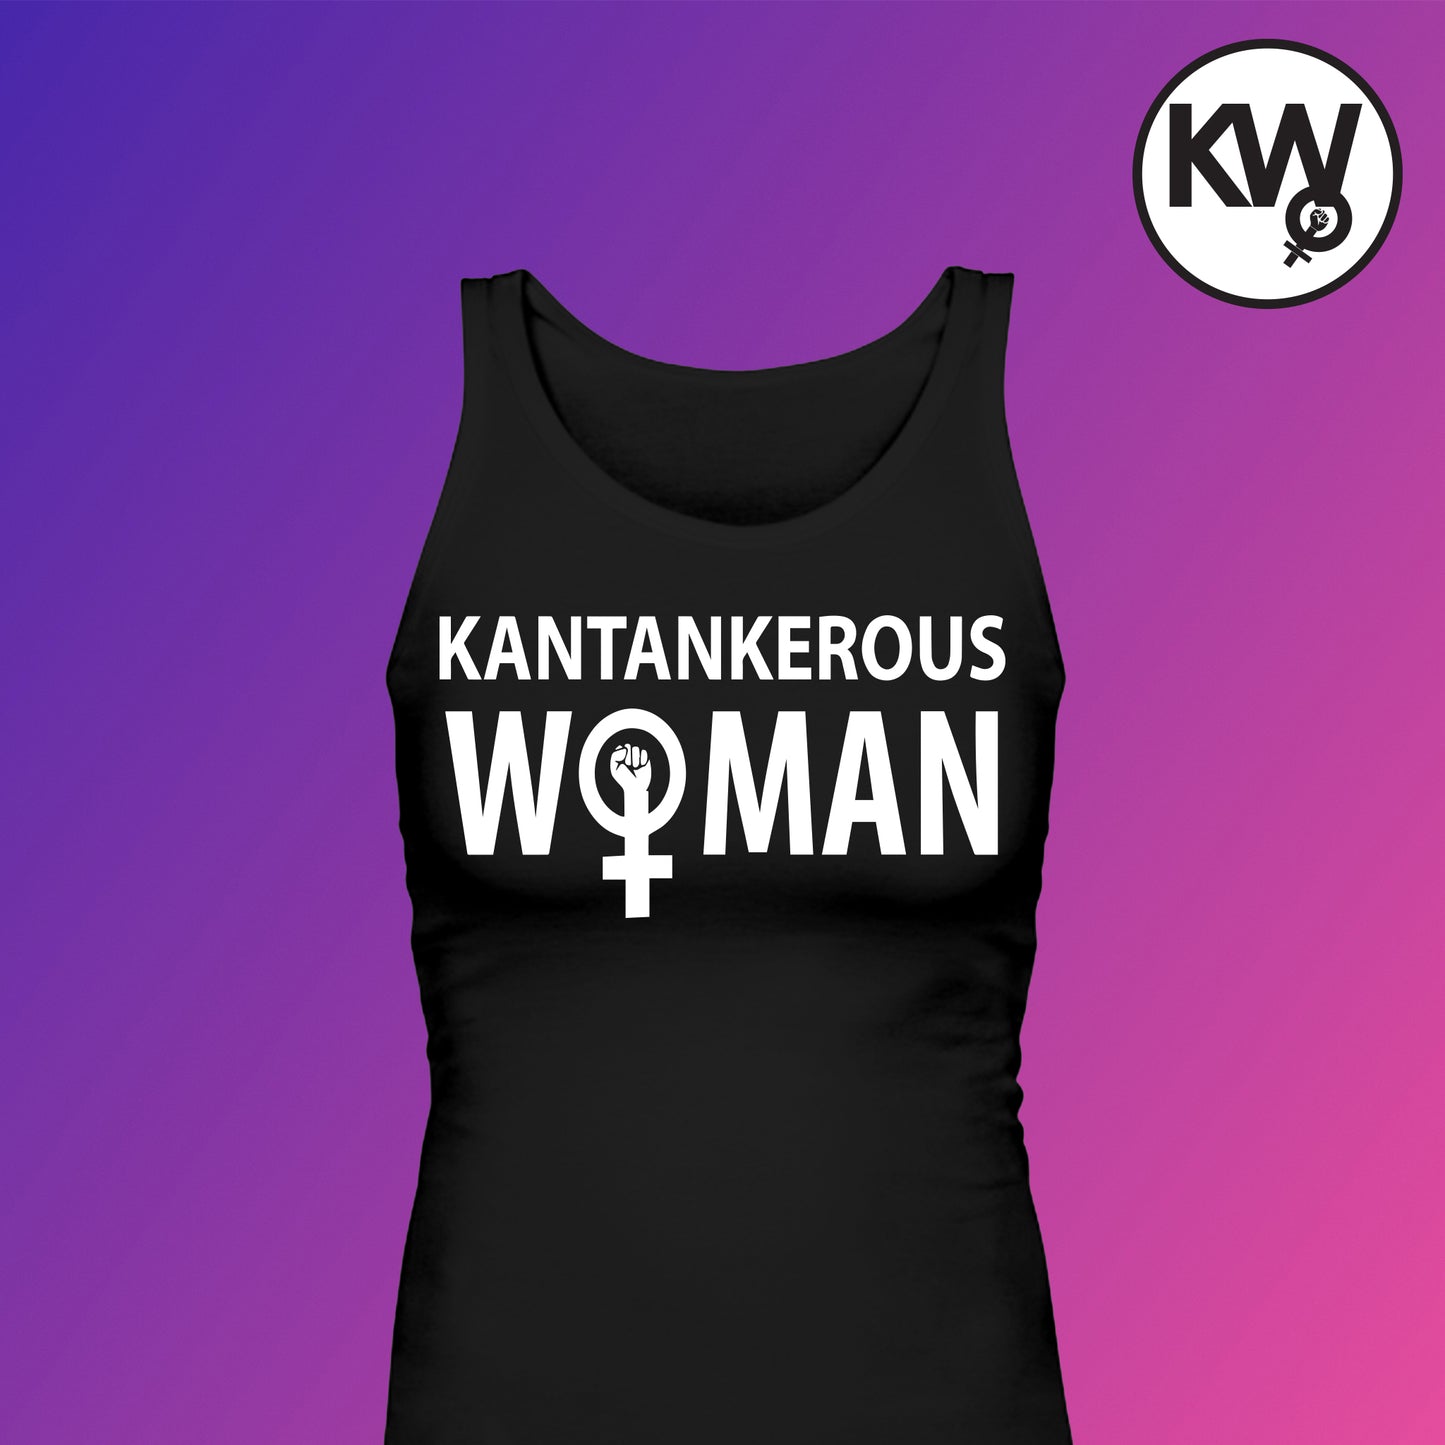 Tank top with "KANTANKEROUS WOMAN" hand screenprint.